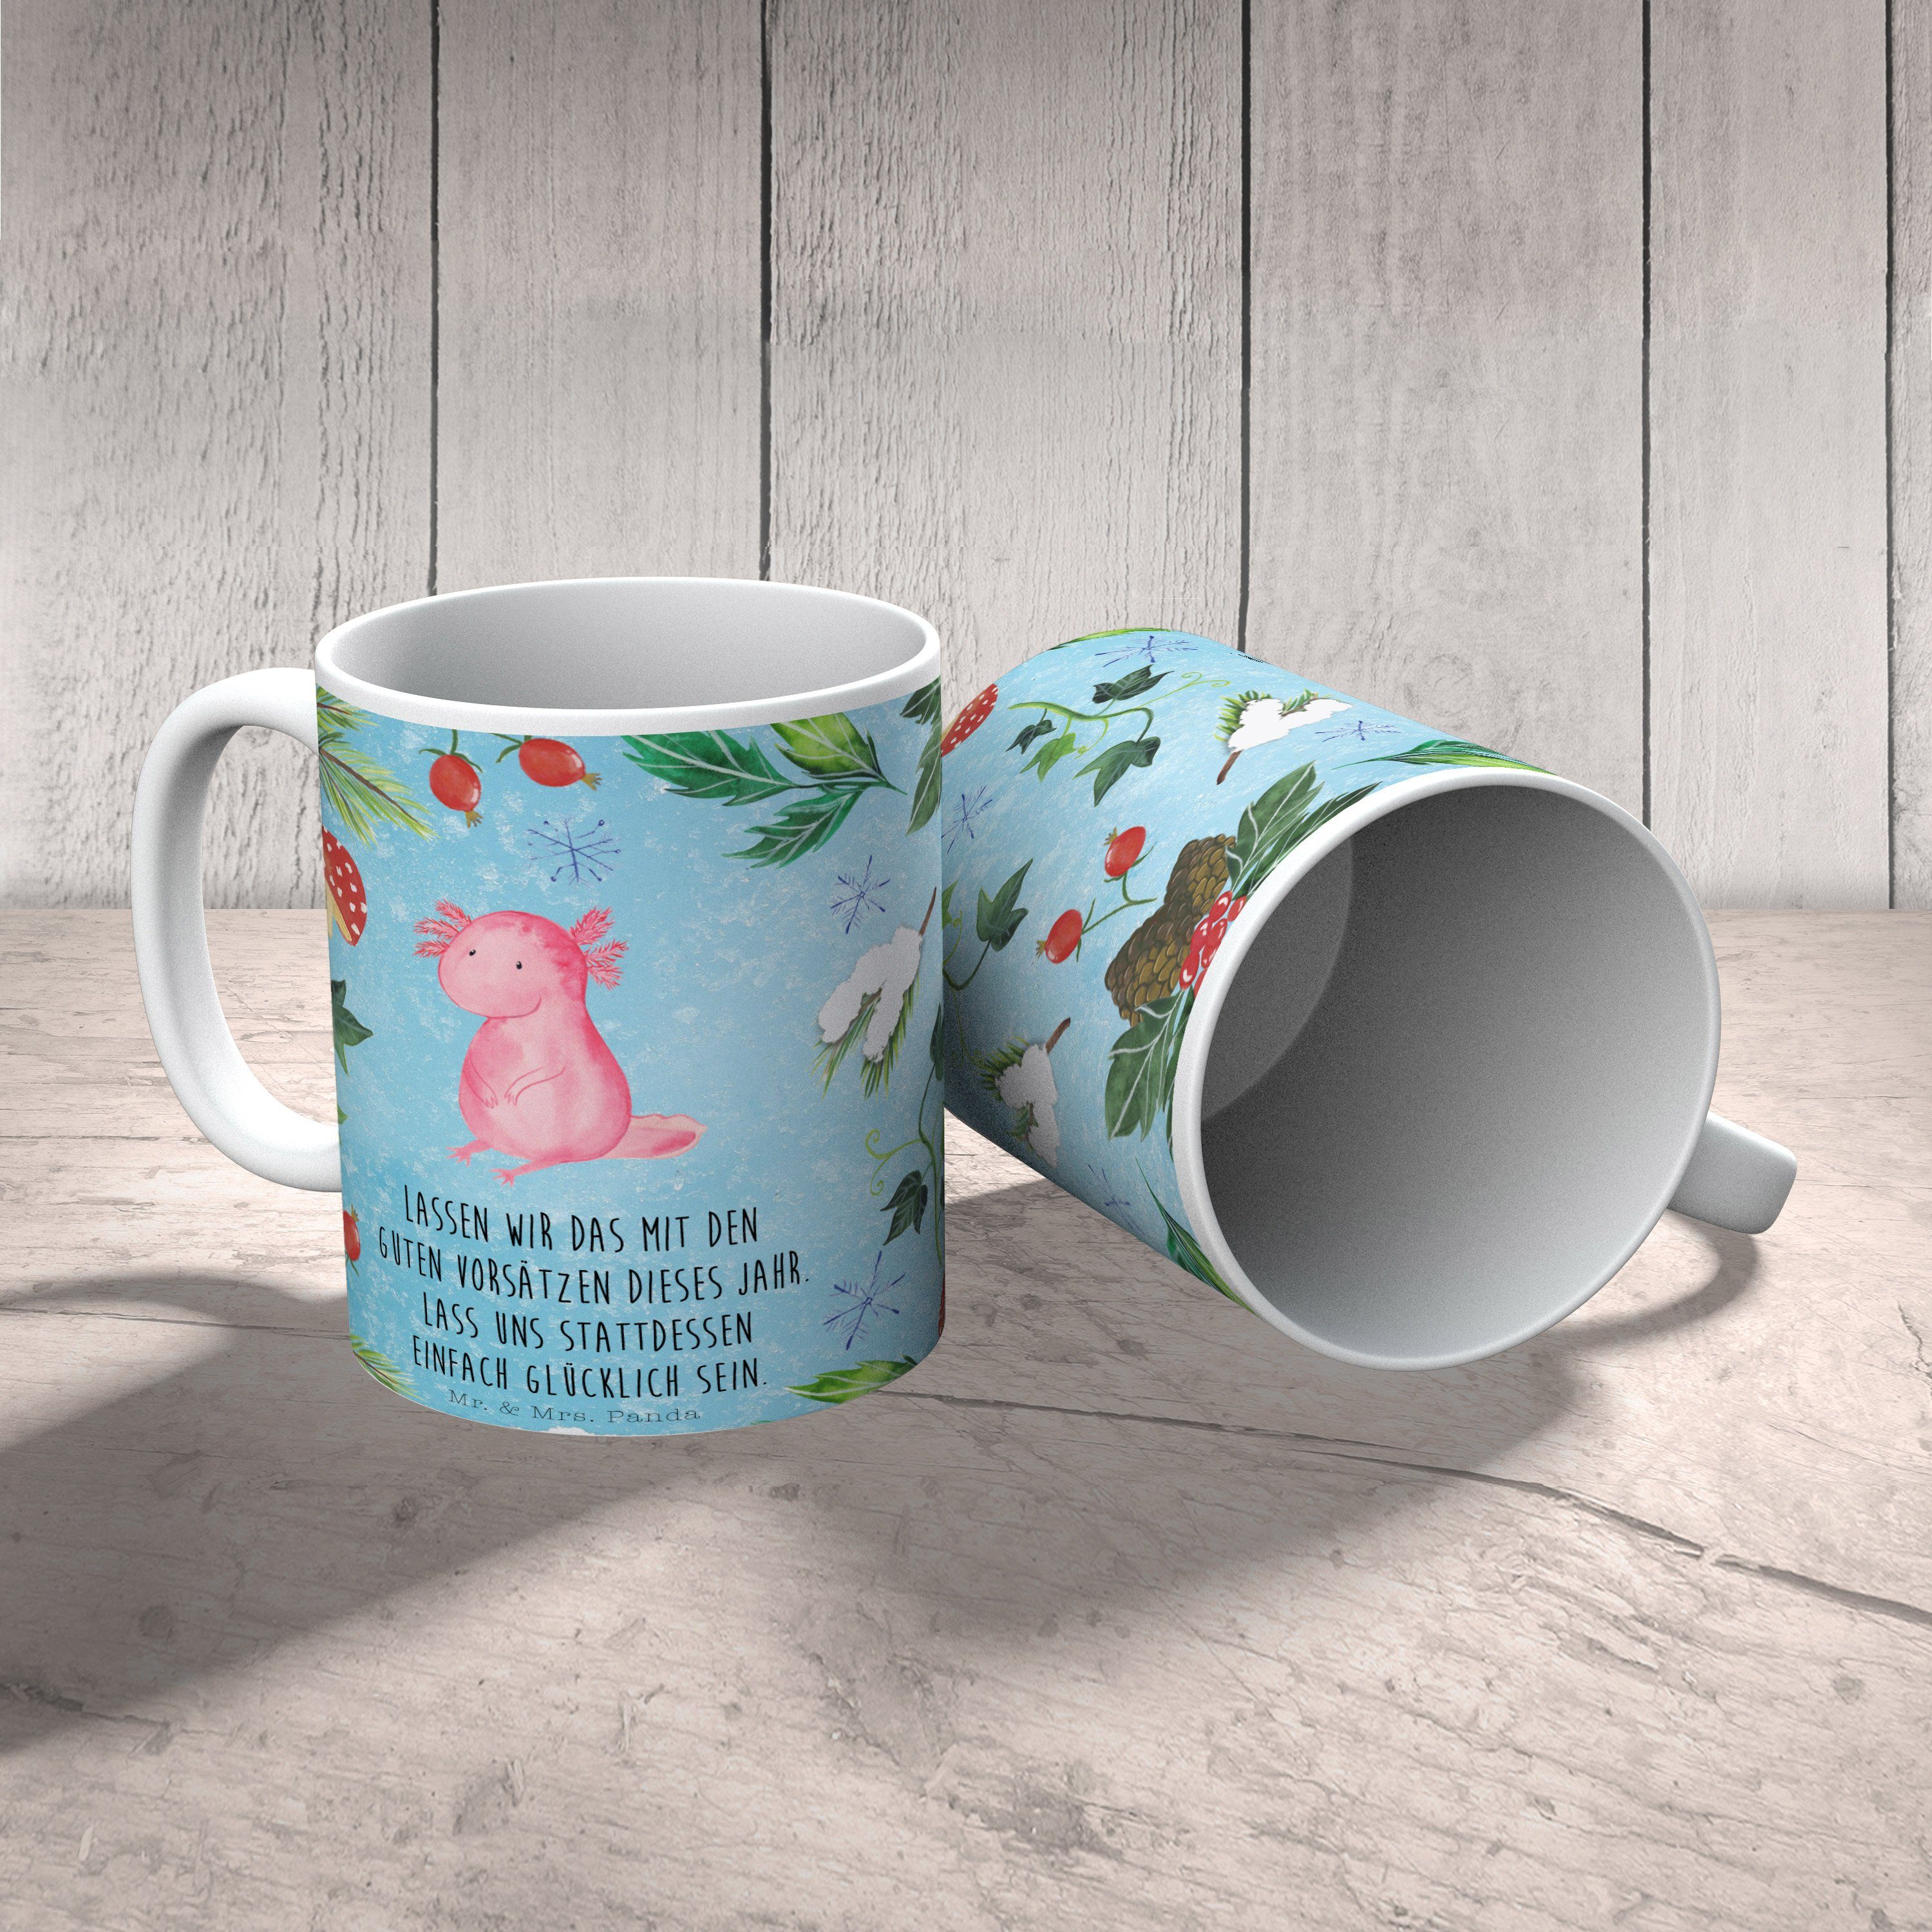 Mr. & Mrs. Panda Tasse - Axolotl - Geschenk, Glücklich Eisblau G, Kaffeebecher, Keramiktasse, Keramik